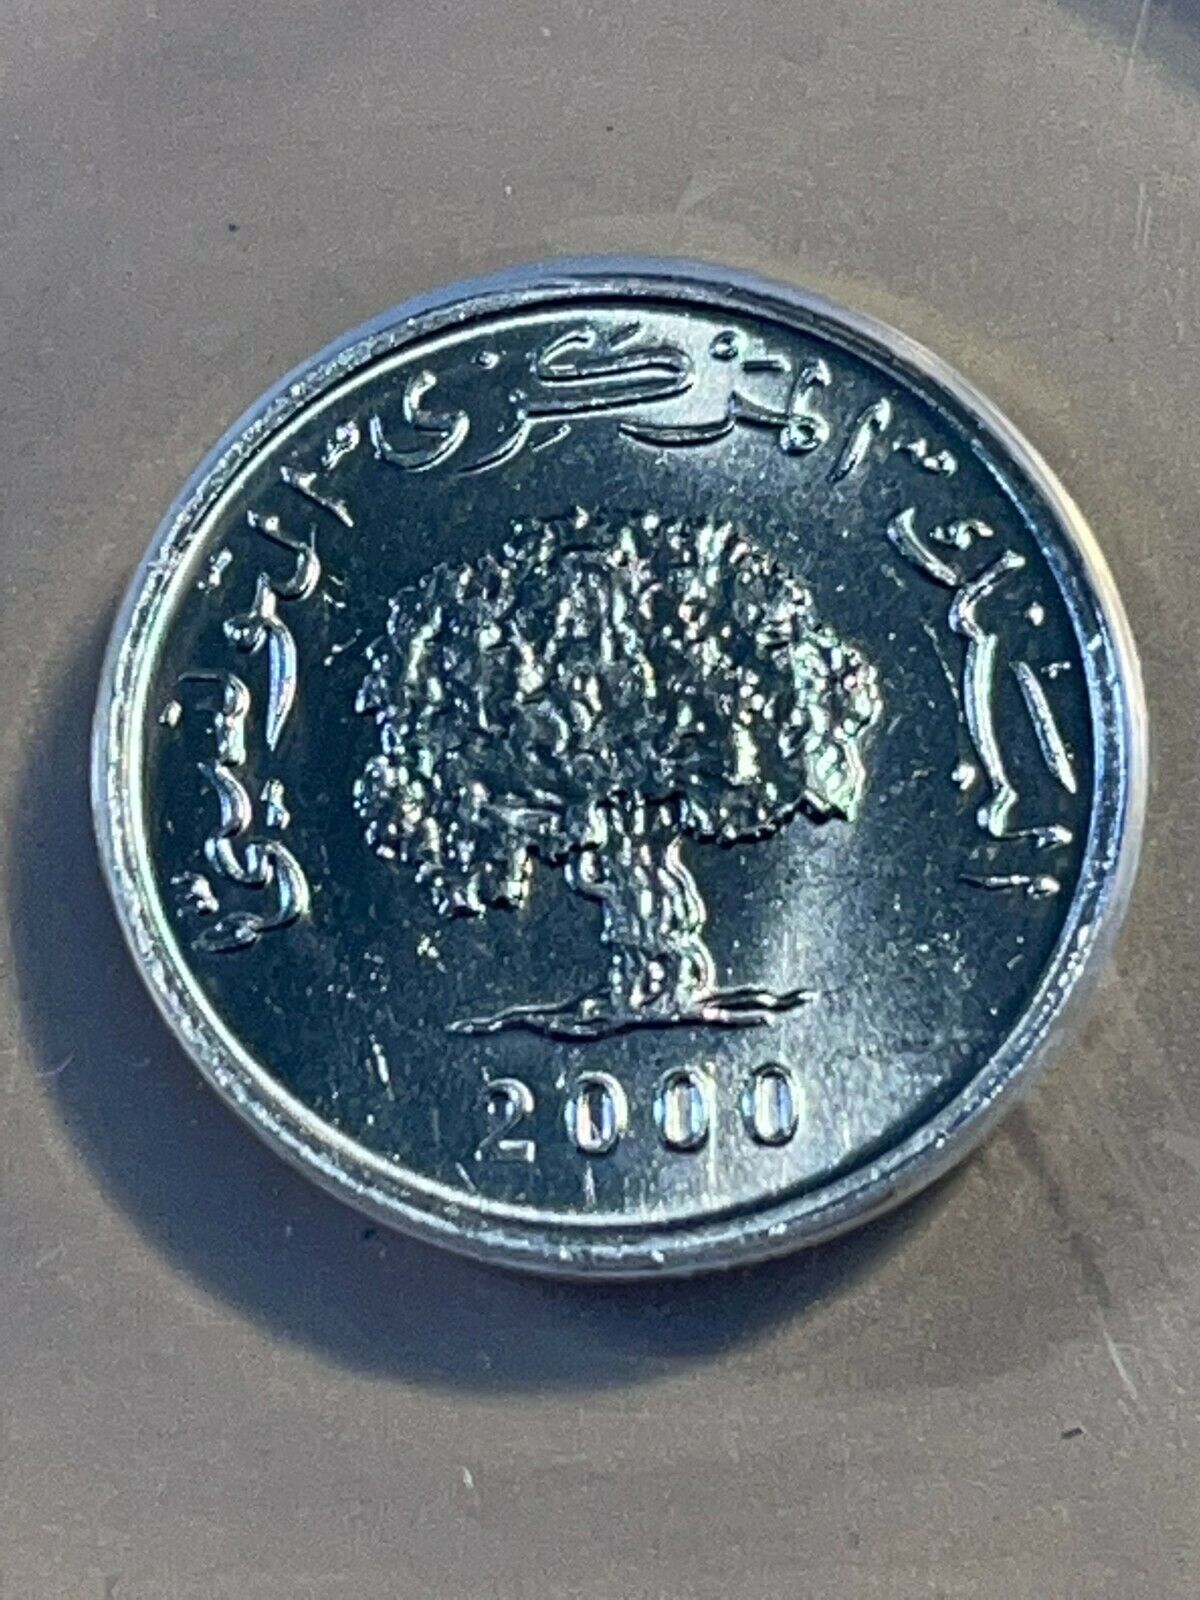 2000 Tunisia 1 Millim Fao Coin Graded Ms65 By Anacs